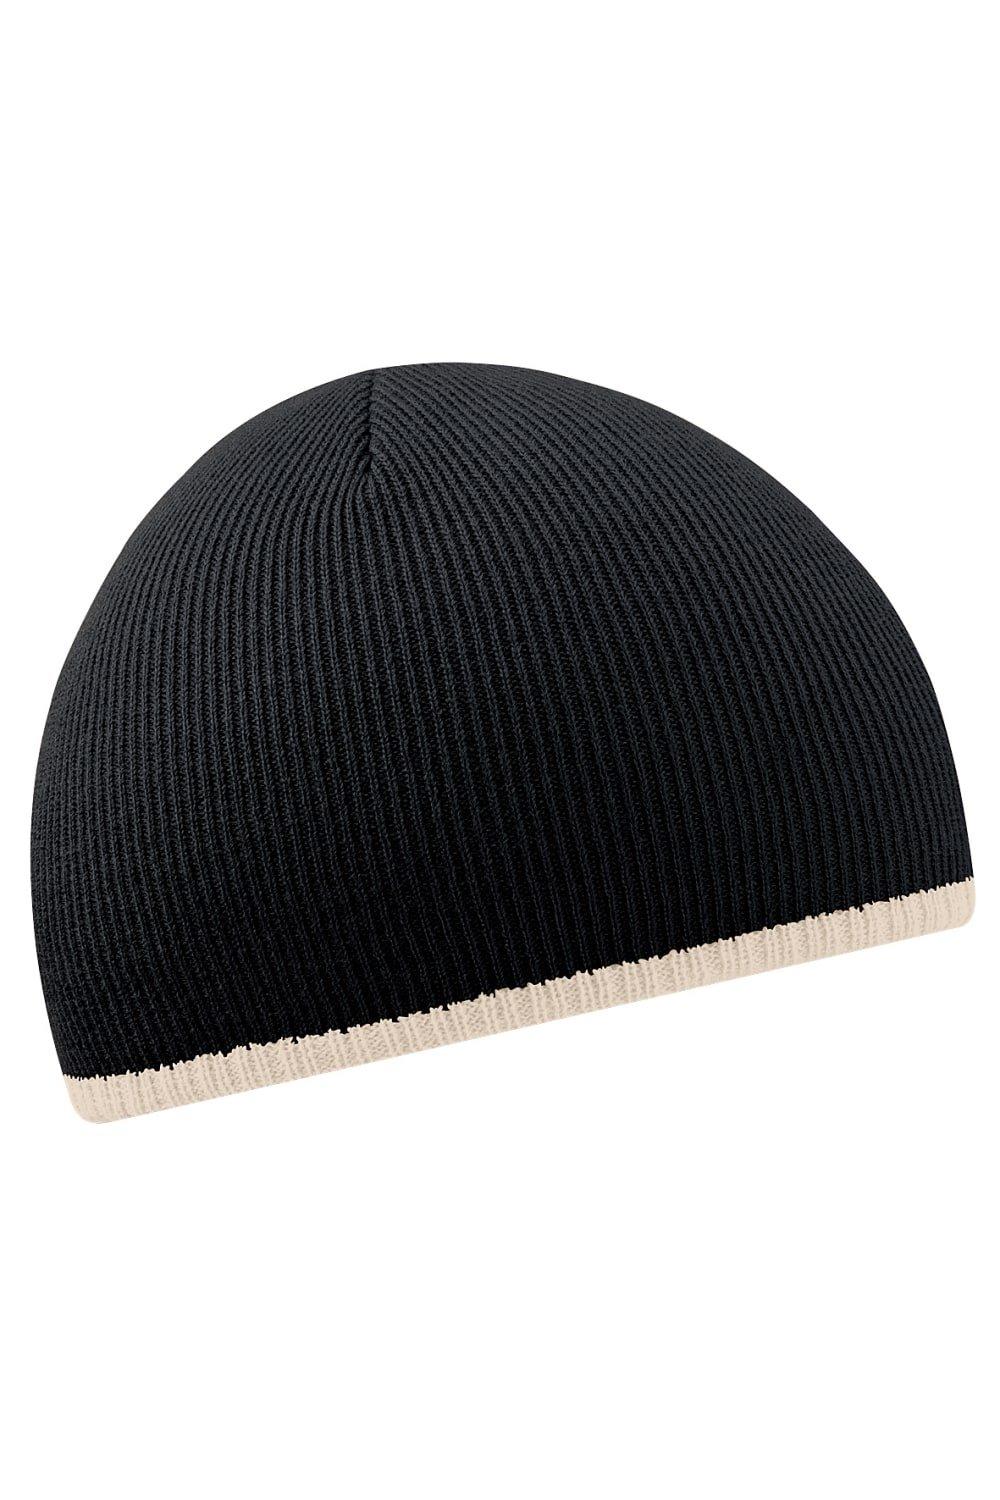 Двухцветная вязаная зимняя шапка-бини Beechfield, черный двухцветная вязаная шапка sevenext